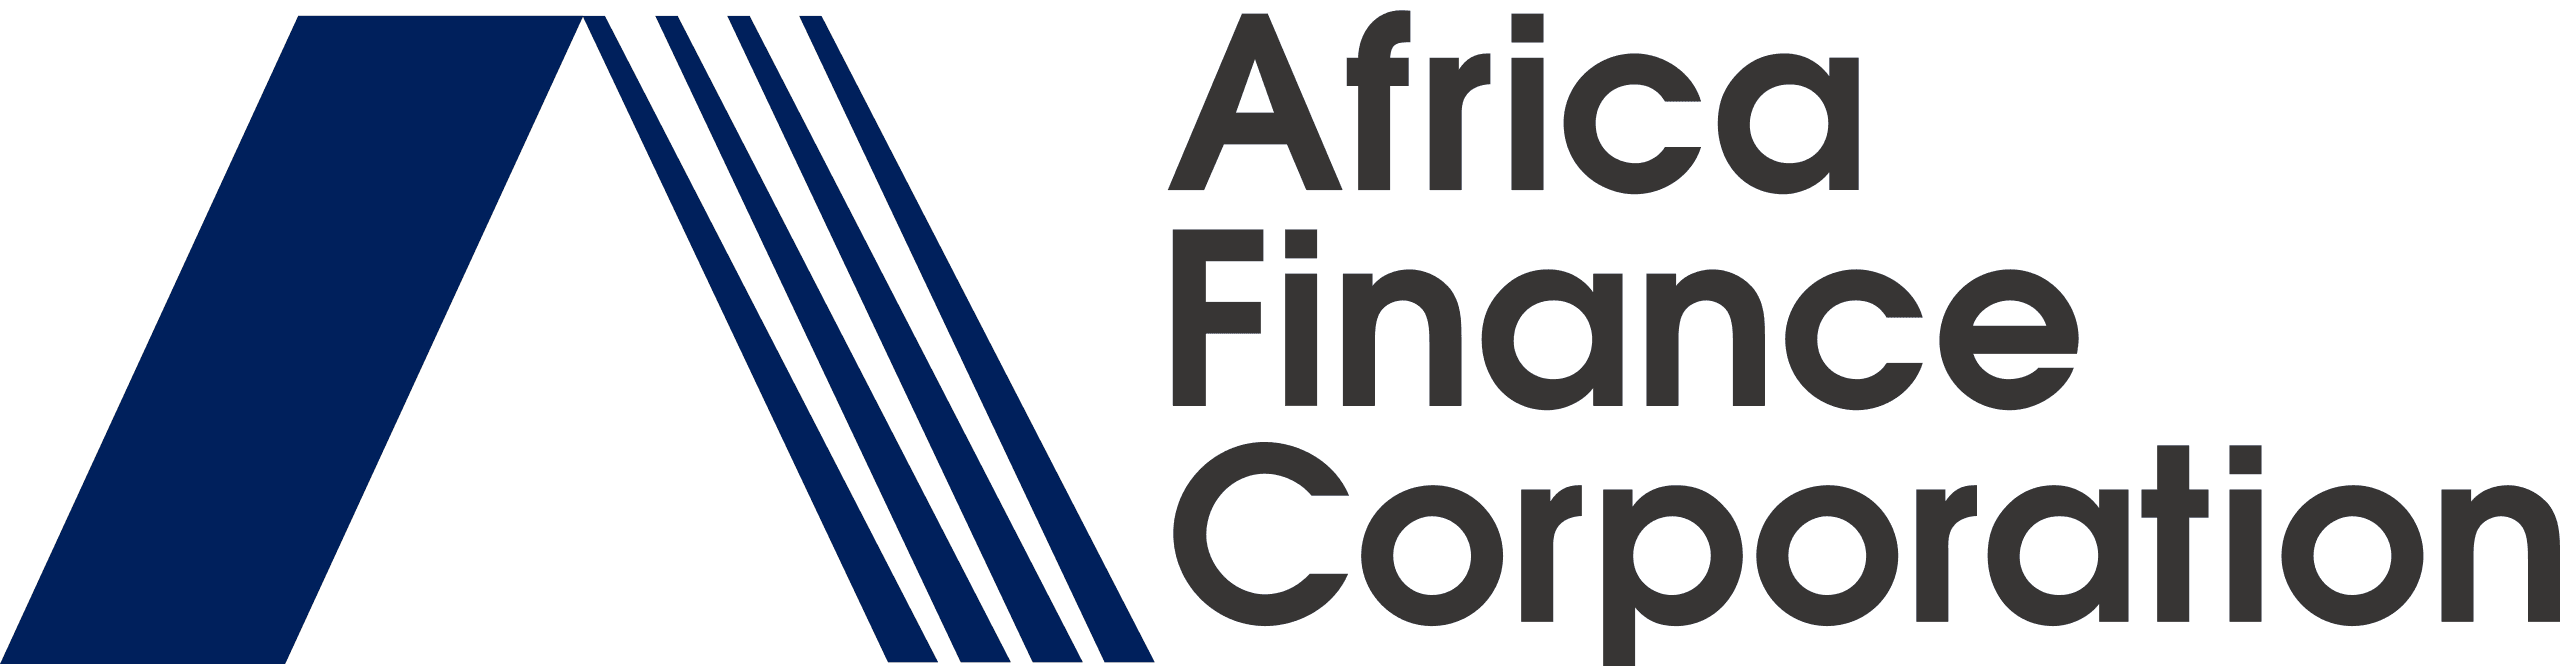 Africa Finanace Corporation